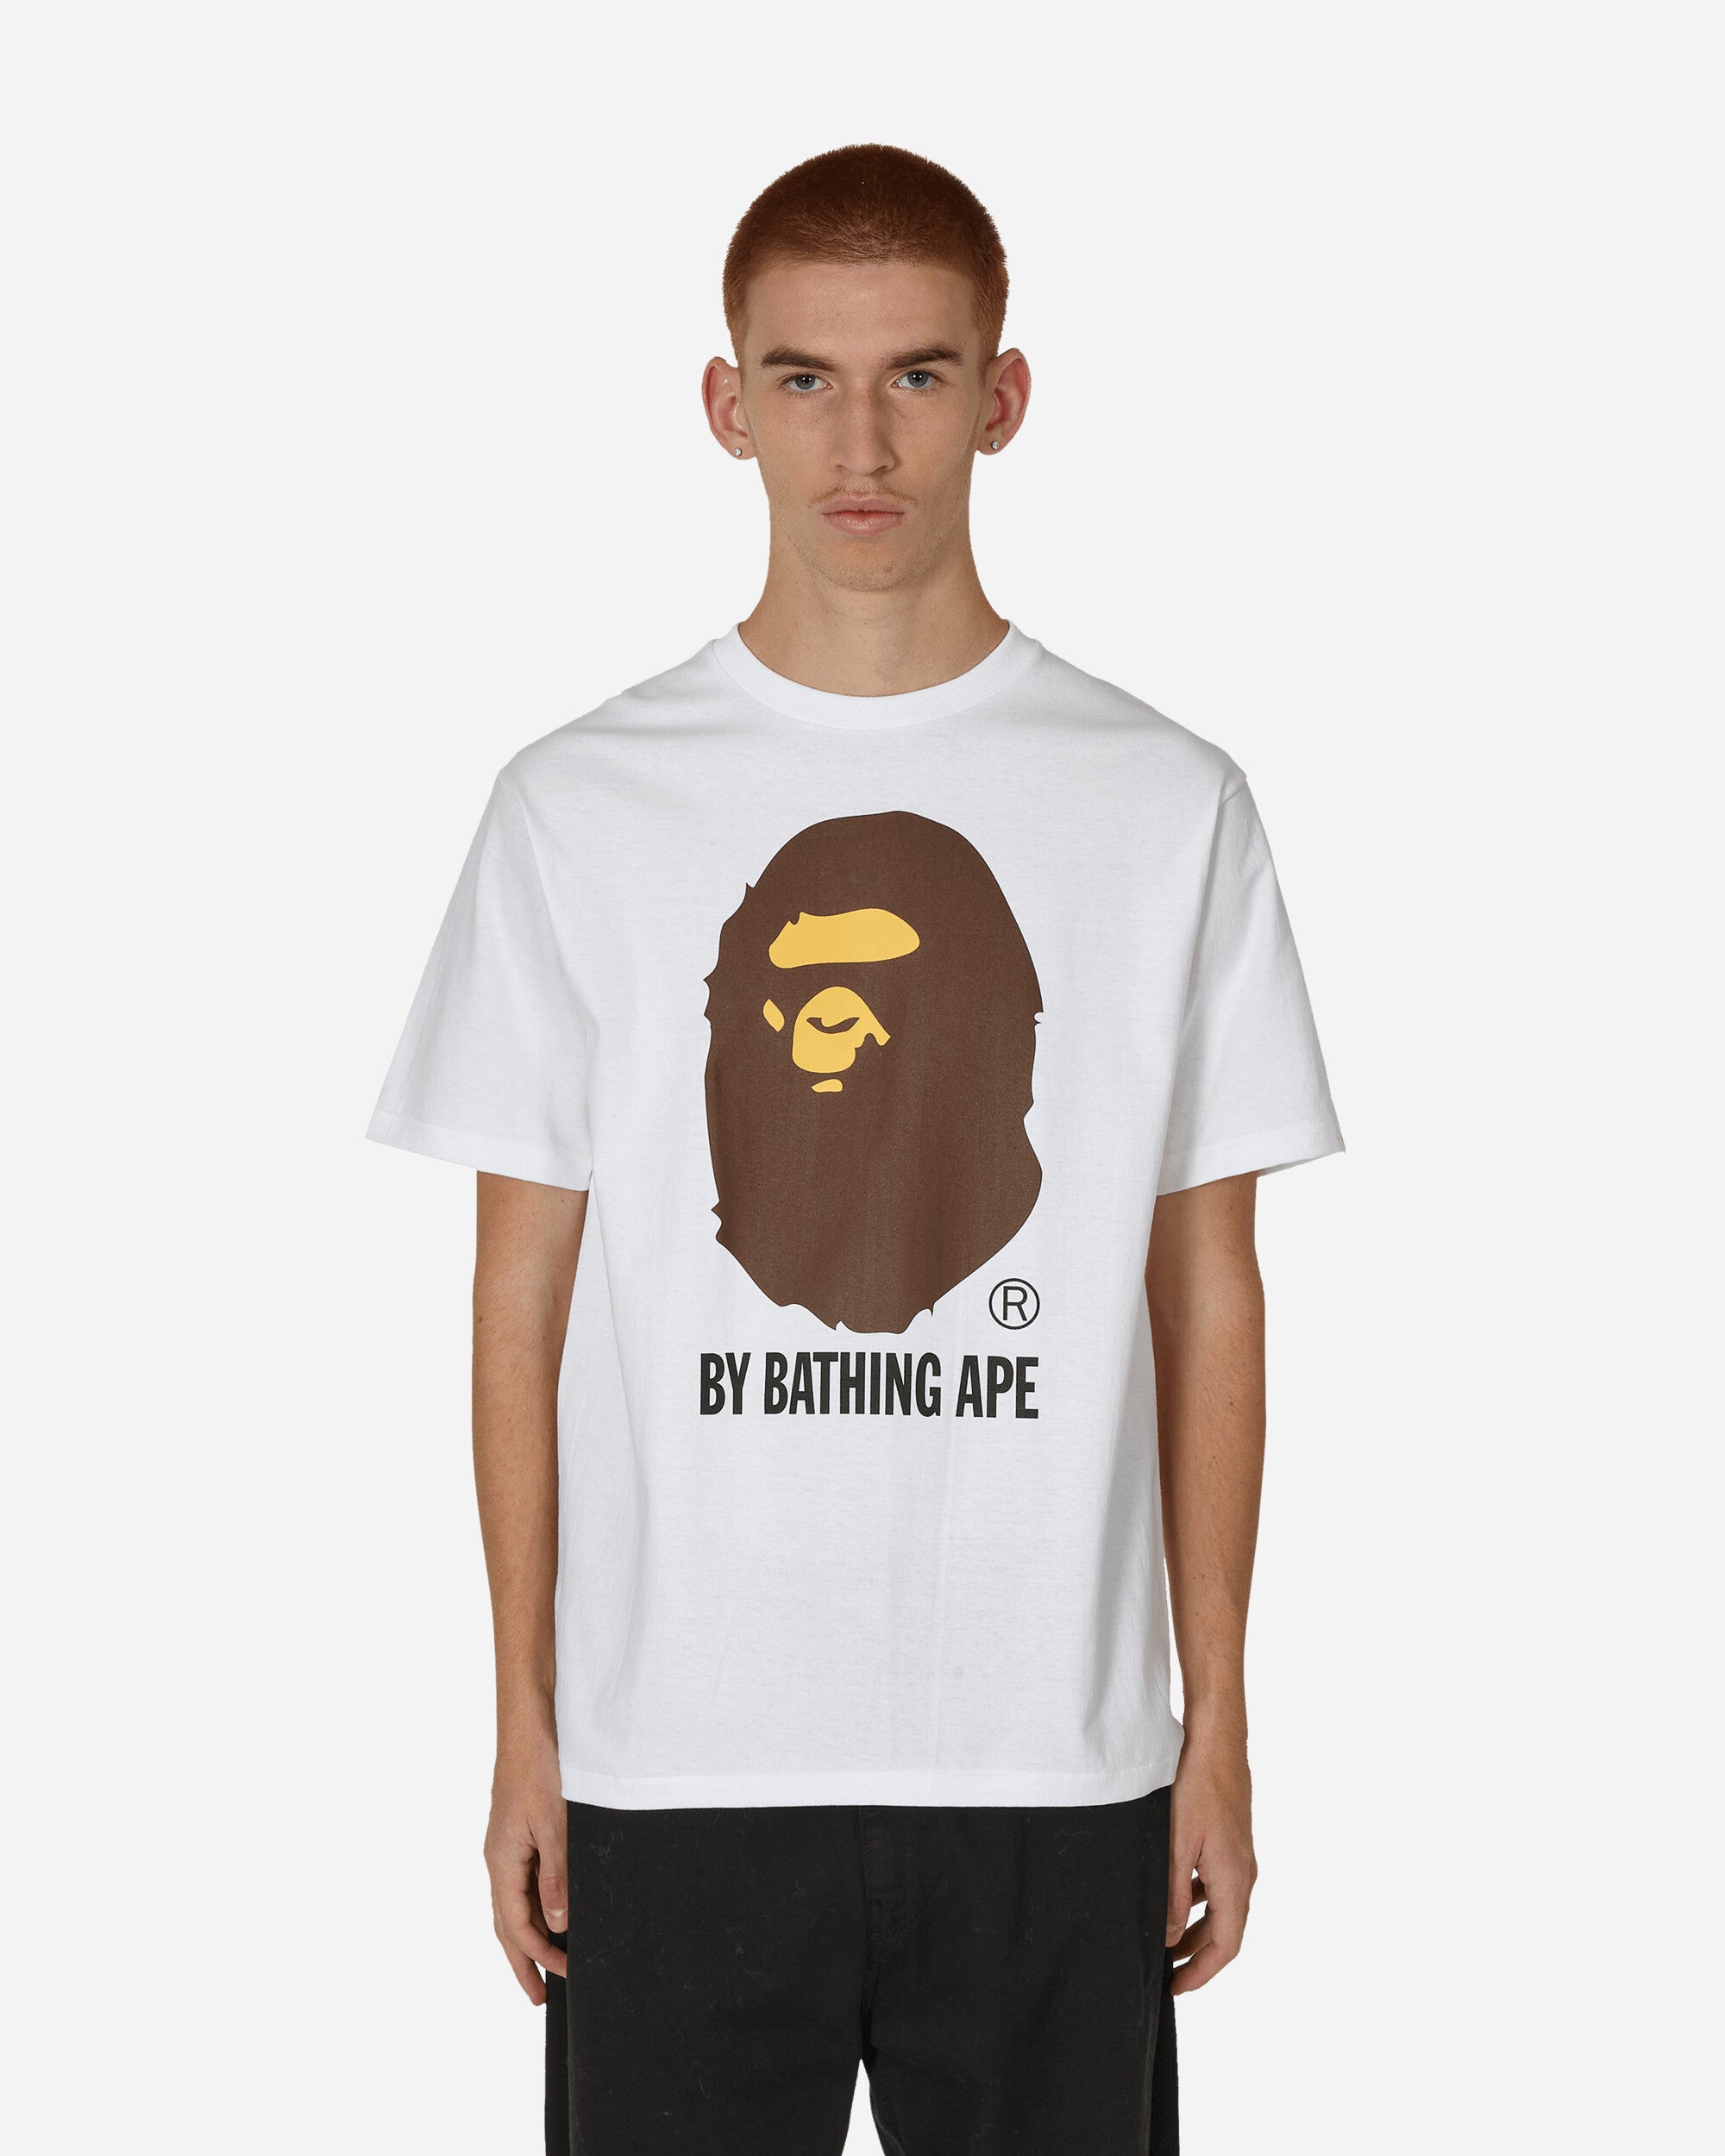 By Bathing Ape T-Shirt White